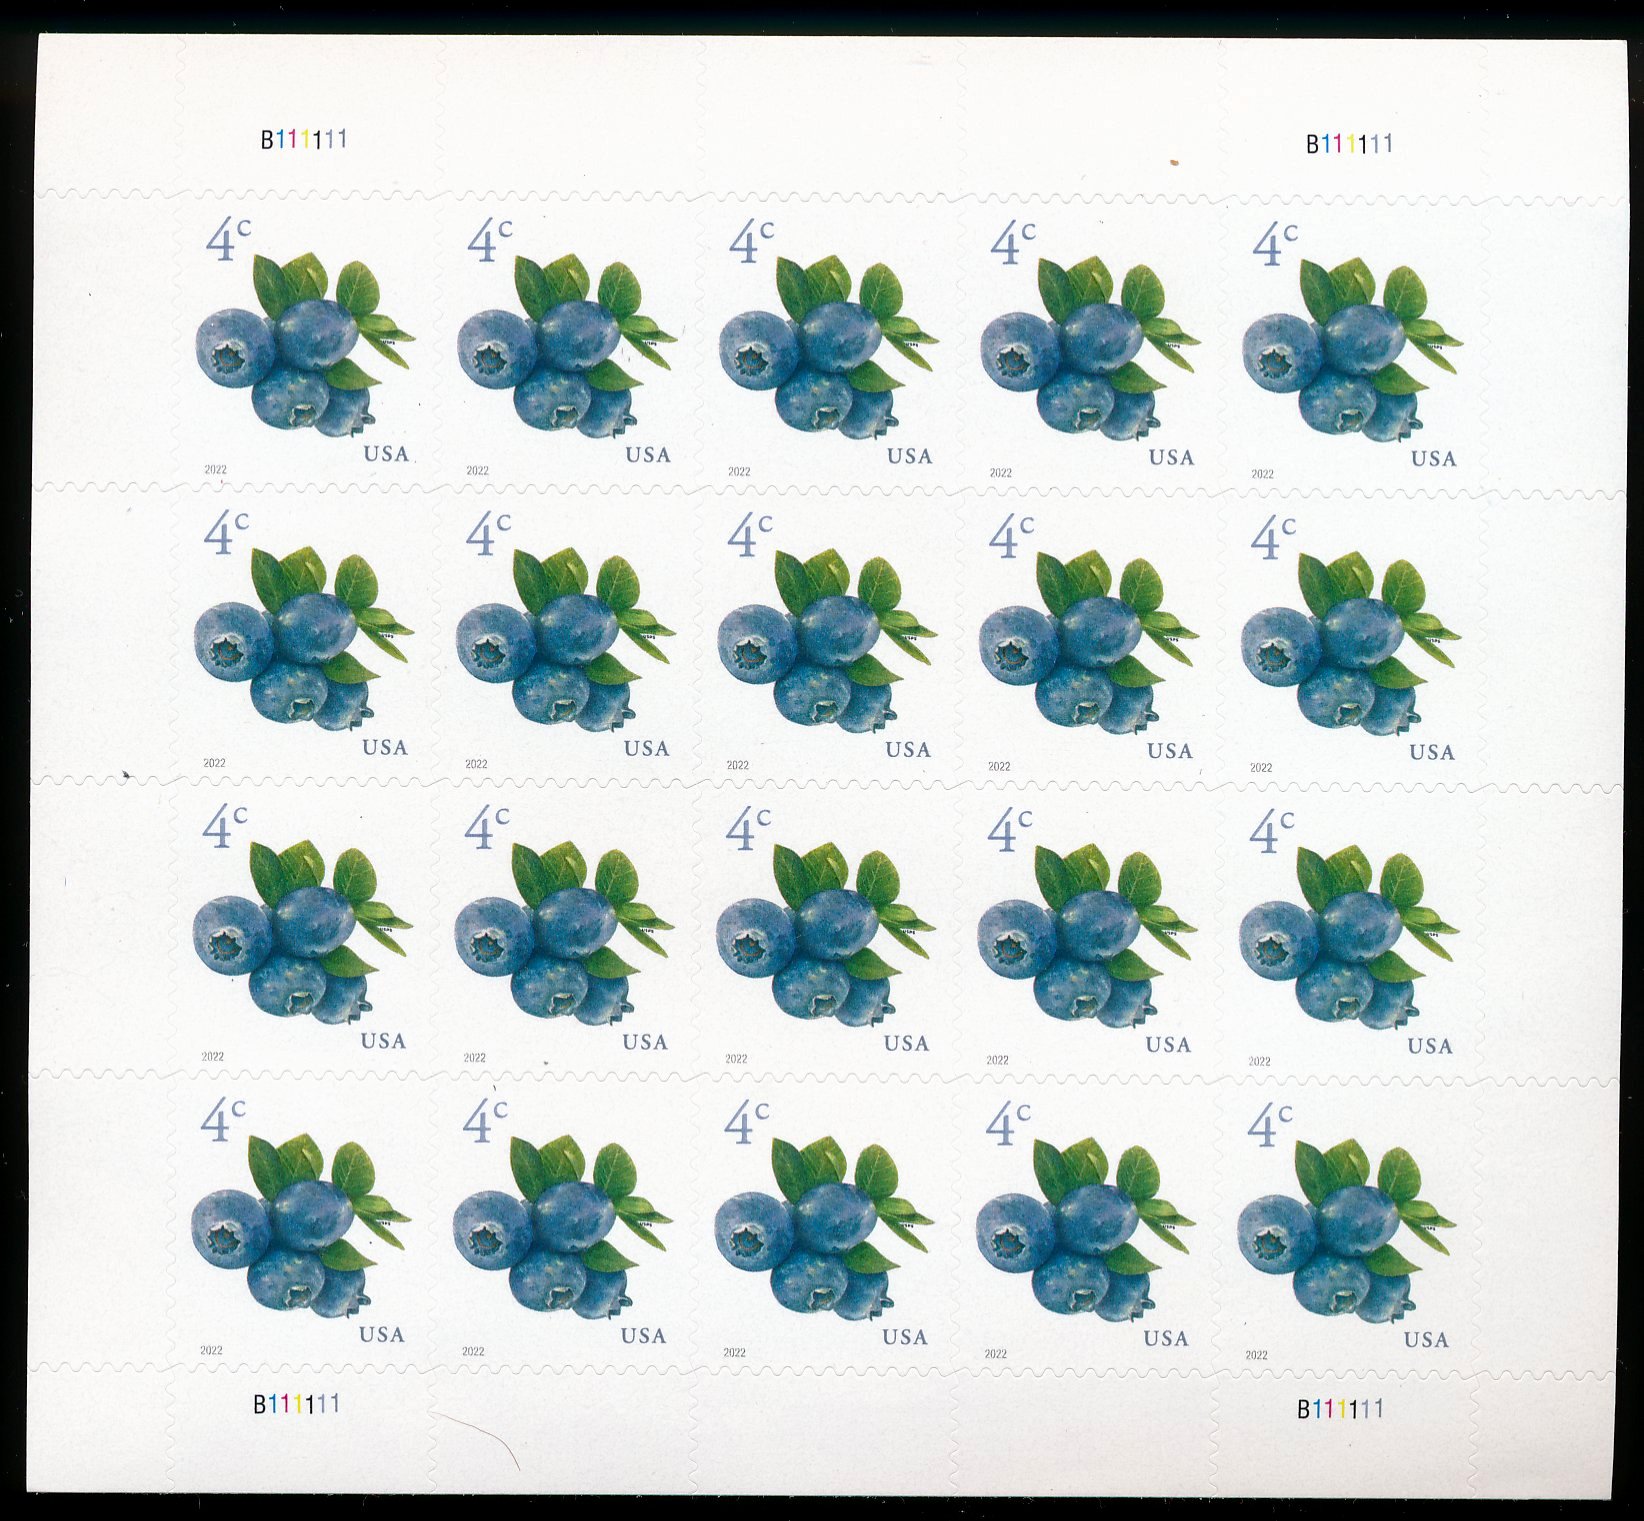 5652sh 4c Blue Berries Mint Sheet of 20 #5652sh